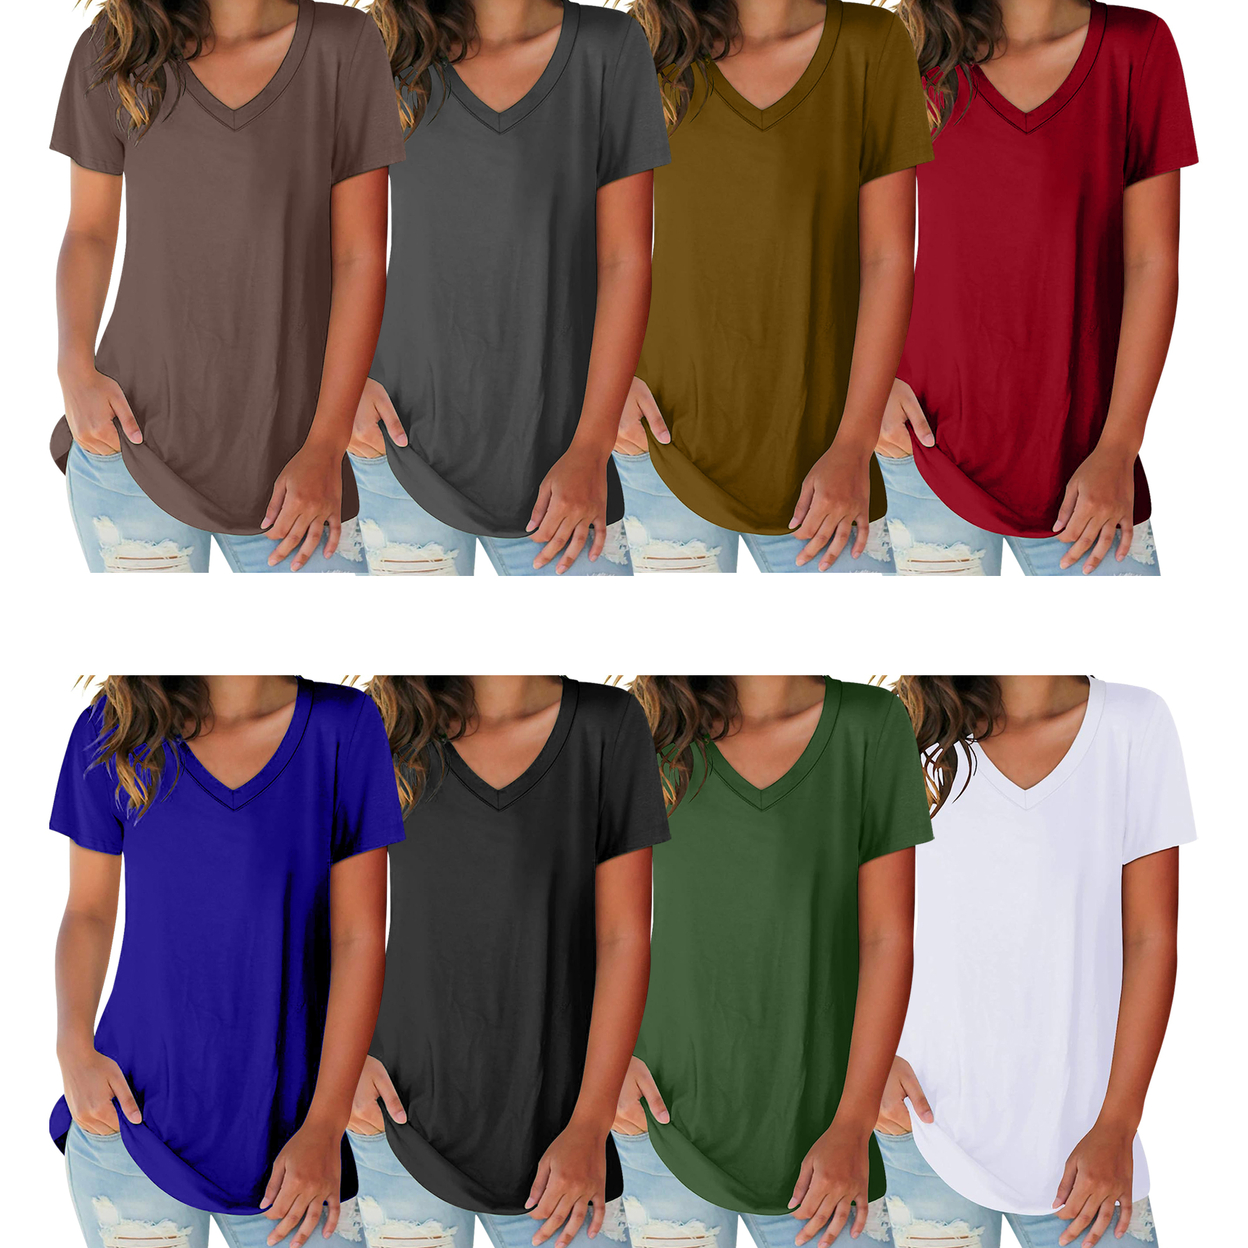 2-Pack: Women's Ultra Soft Smooth Cotton Blend Basic V-Neck Short Sleeve Shirts - White & Brown, Large